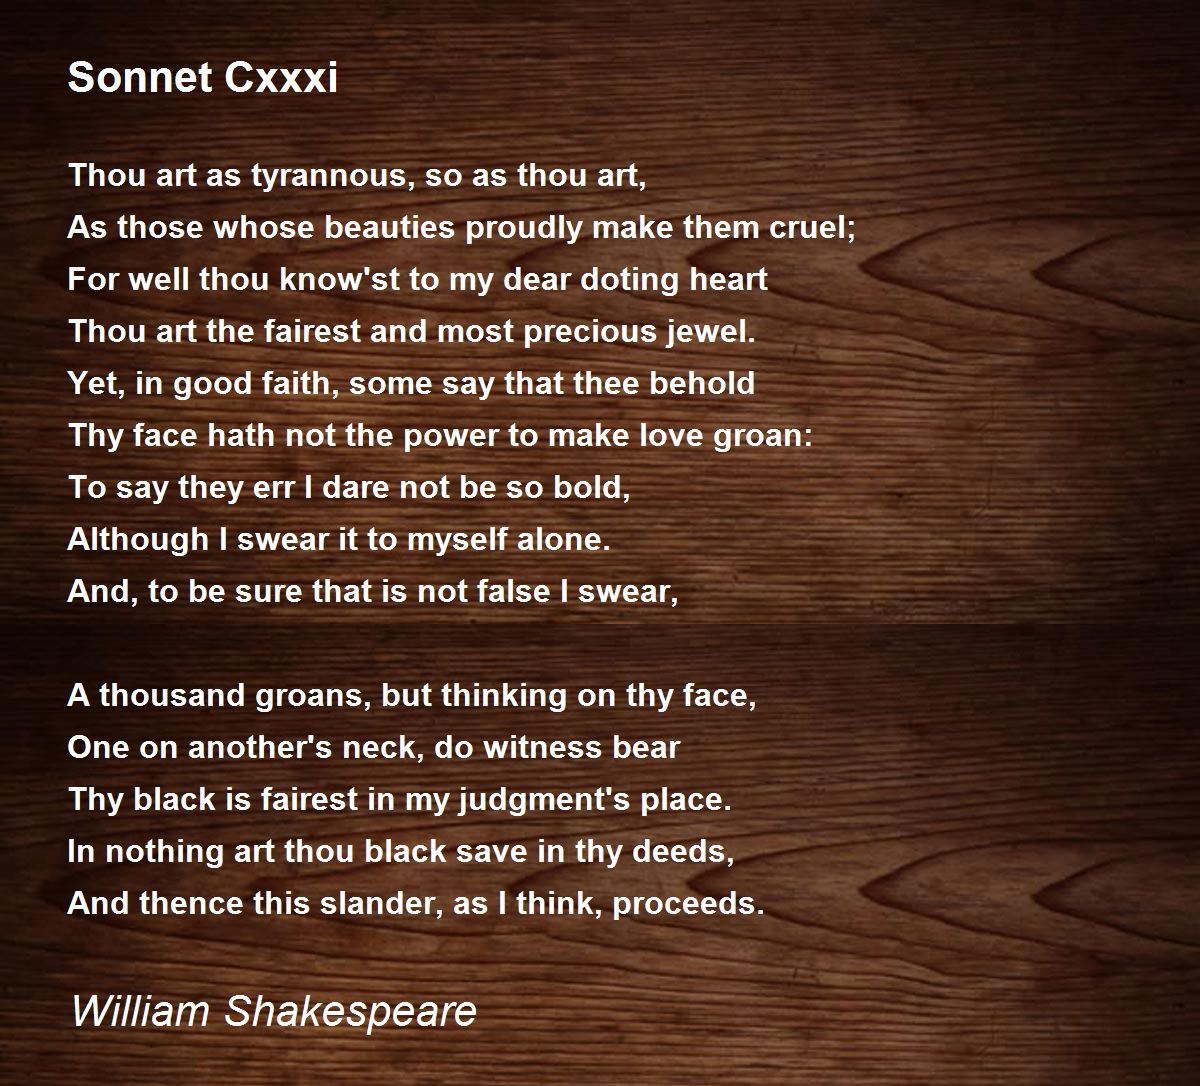 Sonnet Cxxxi Poem by William Shakespeare - Poem Hunter